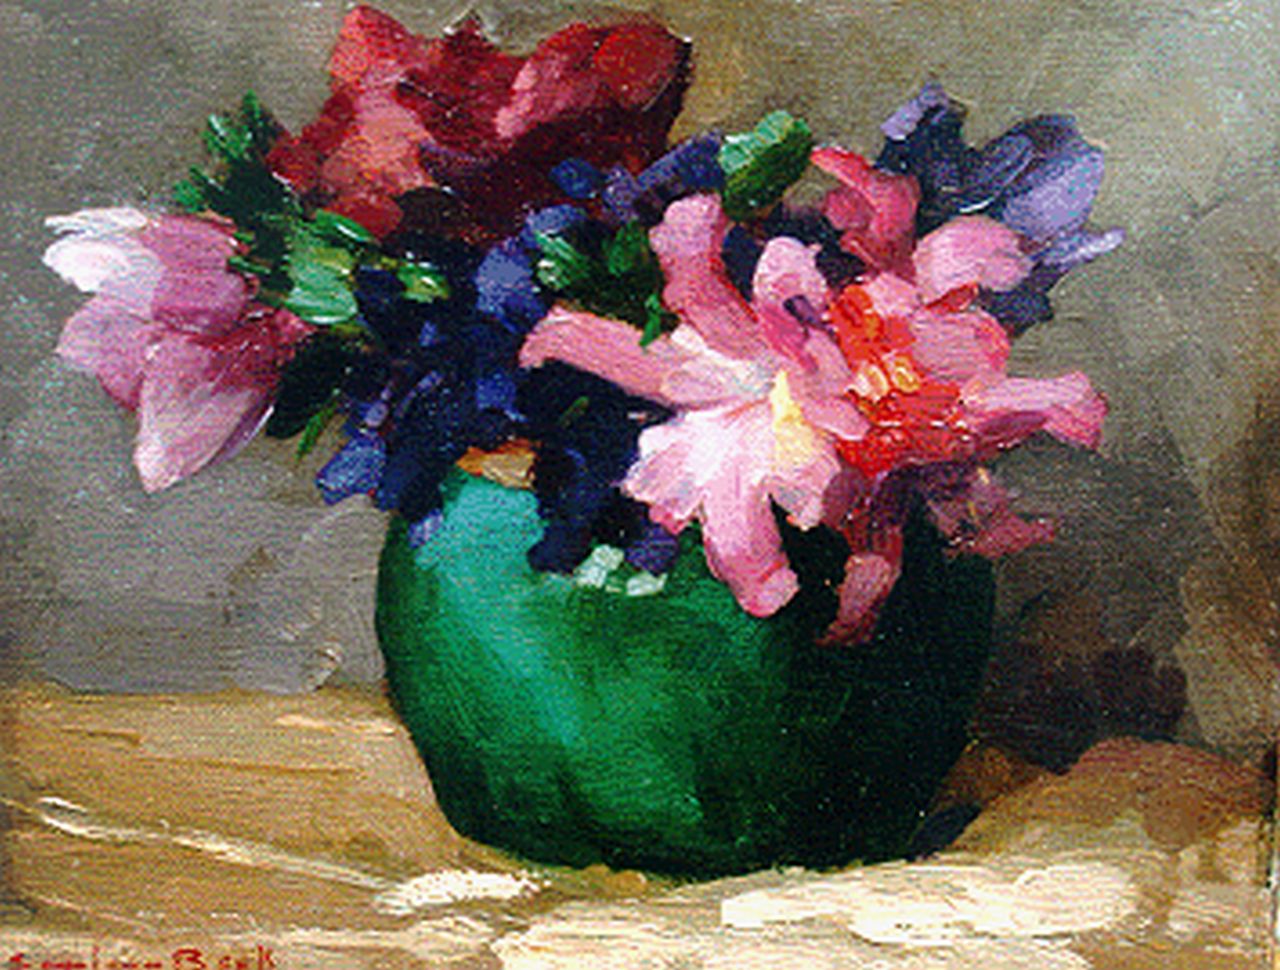 Beek S.J. van | Samuel Joseph 'Sam' van Beek, Coloured flowers in a ginger jar, Öl auf Leinwand auf Holz 18,4 x 24,0 cm, signed l.l.